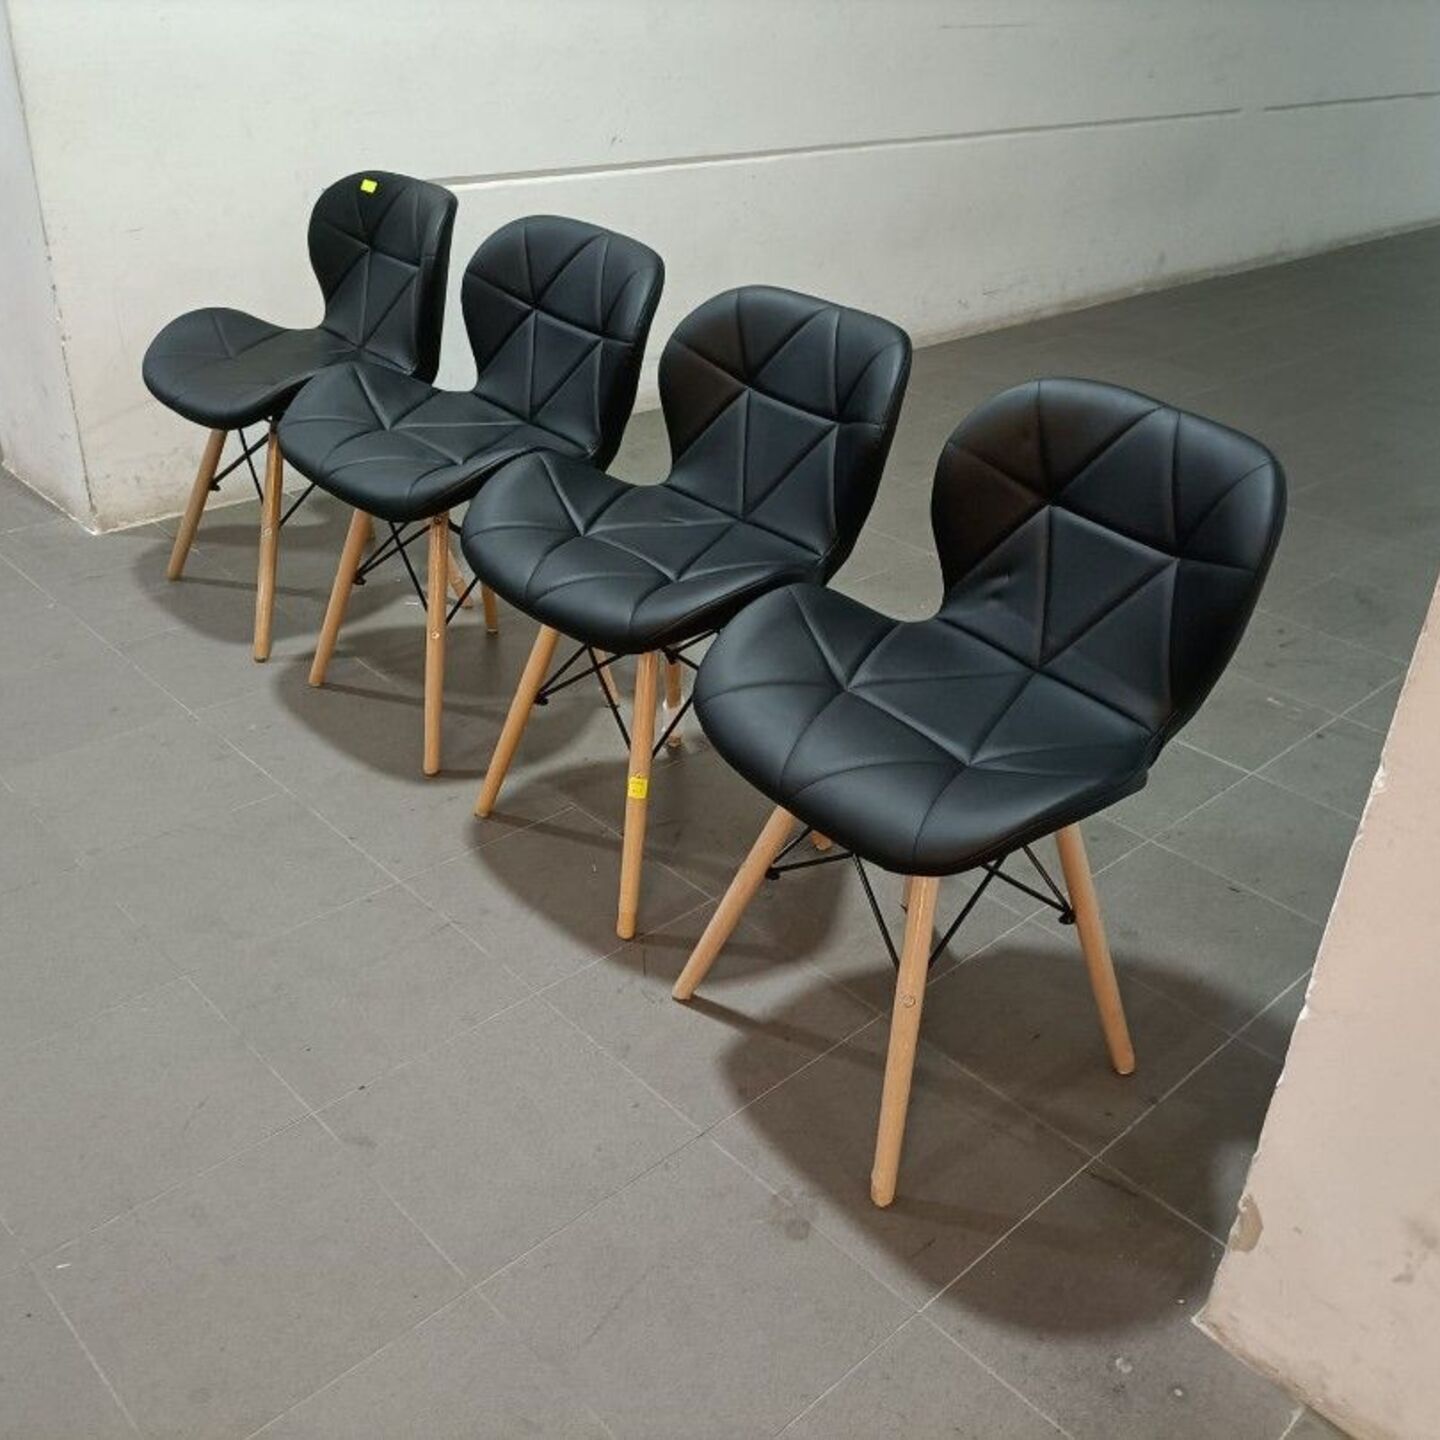 4 x KYOCHI Chairs in BLACK